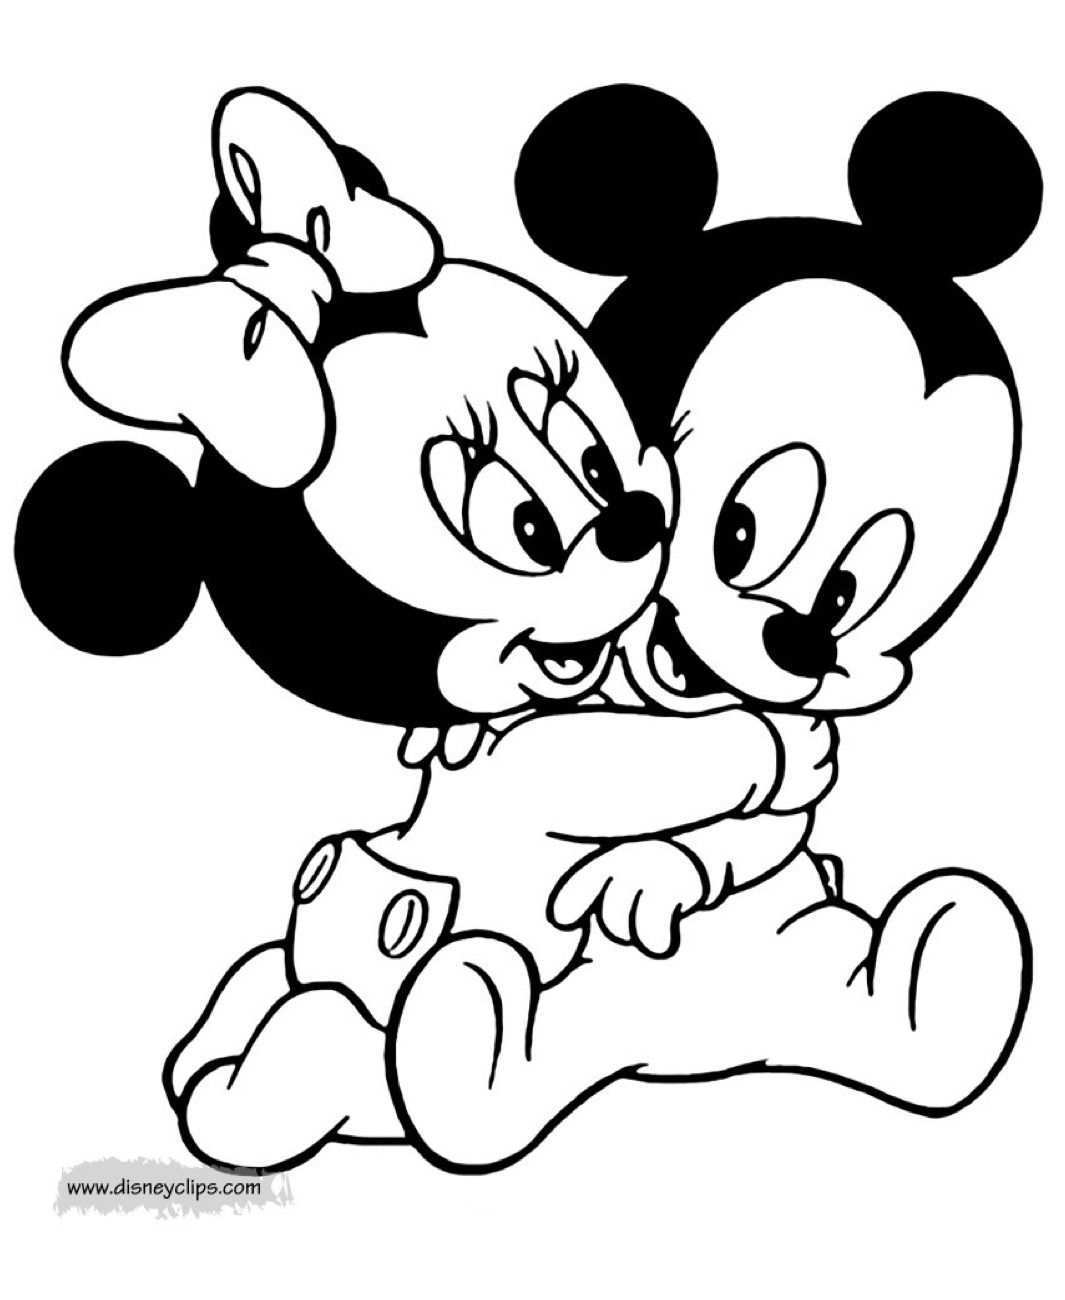 Pin By Melhor Idade On Minie Mickey Mouse Coloring Pages Minnie Mouse Coloring Pages